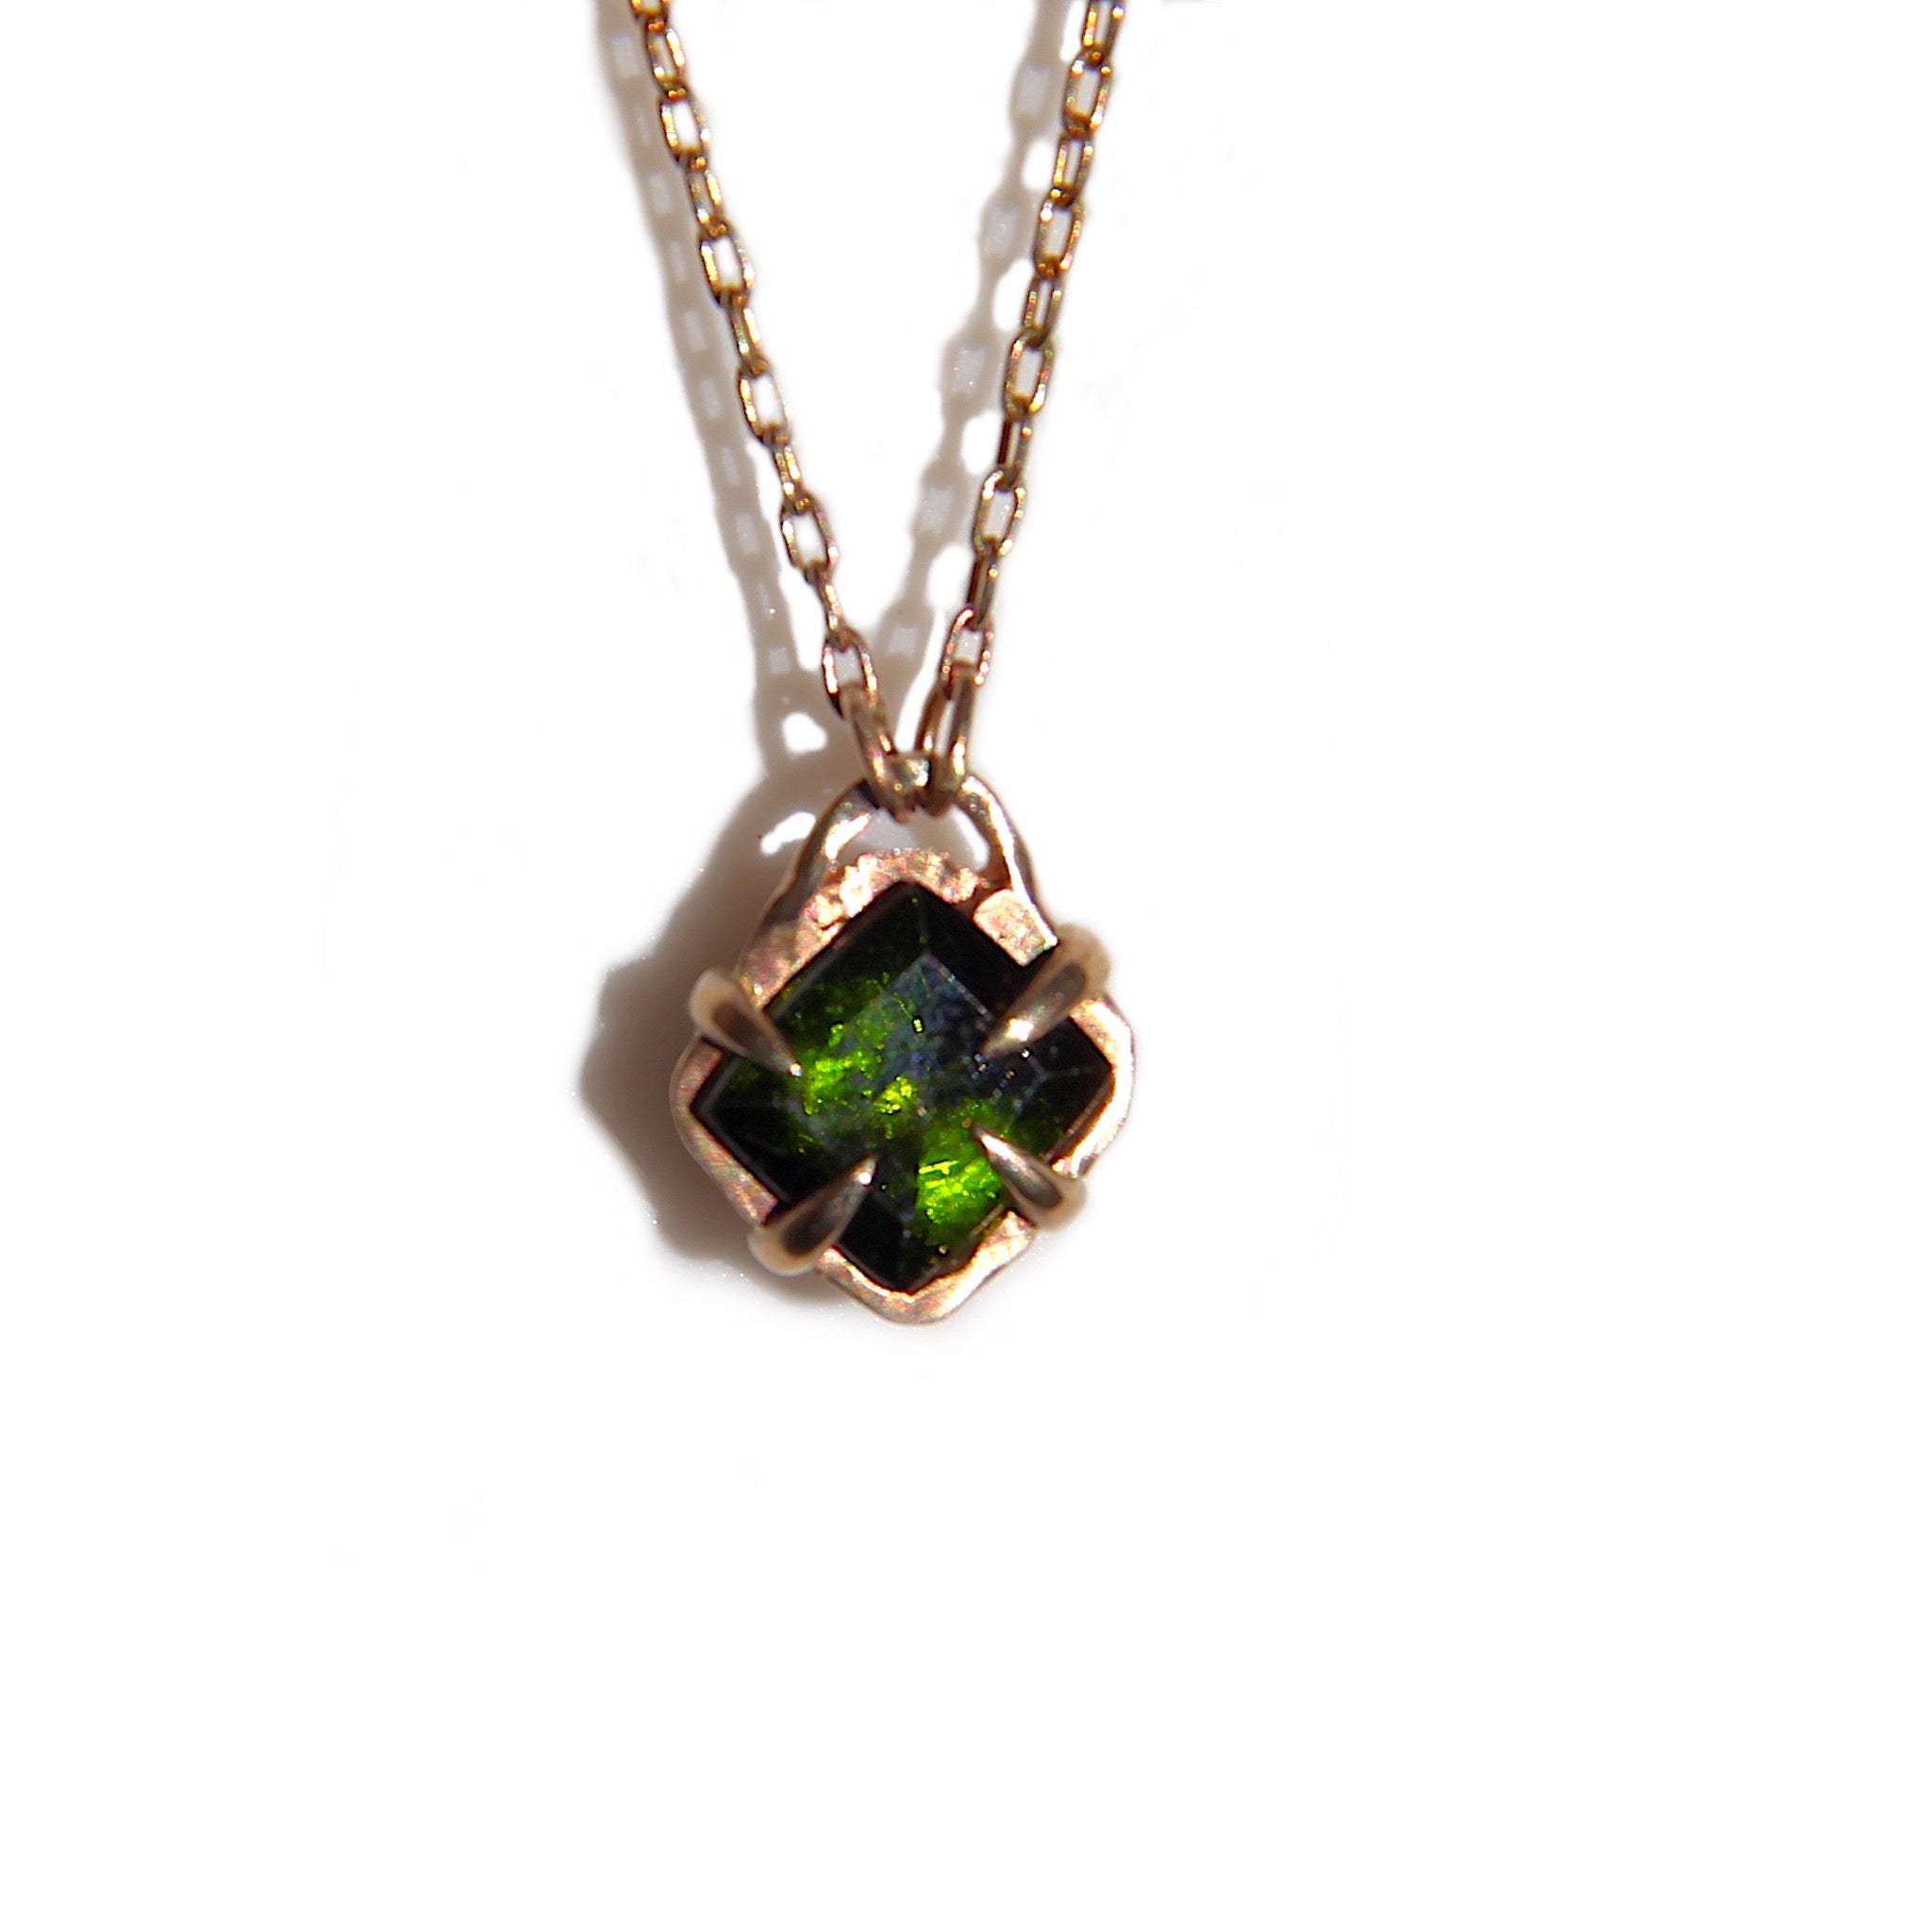 Square Green Tourmaline necklace